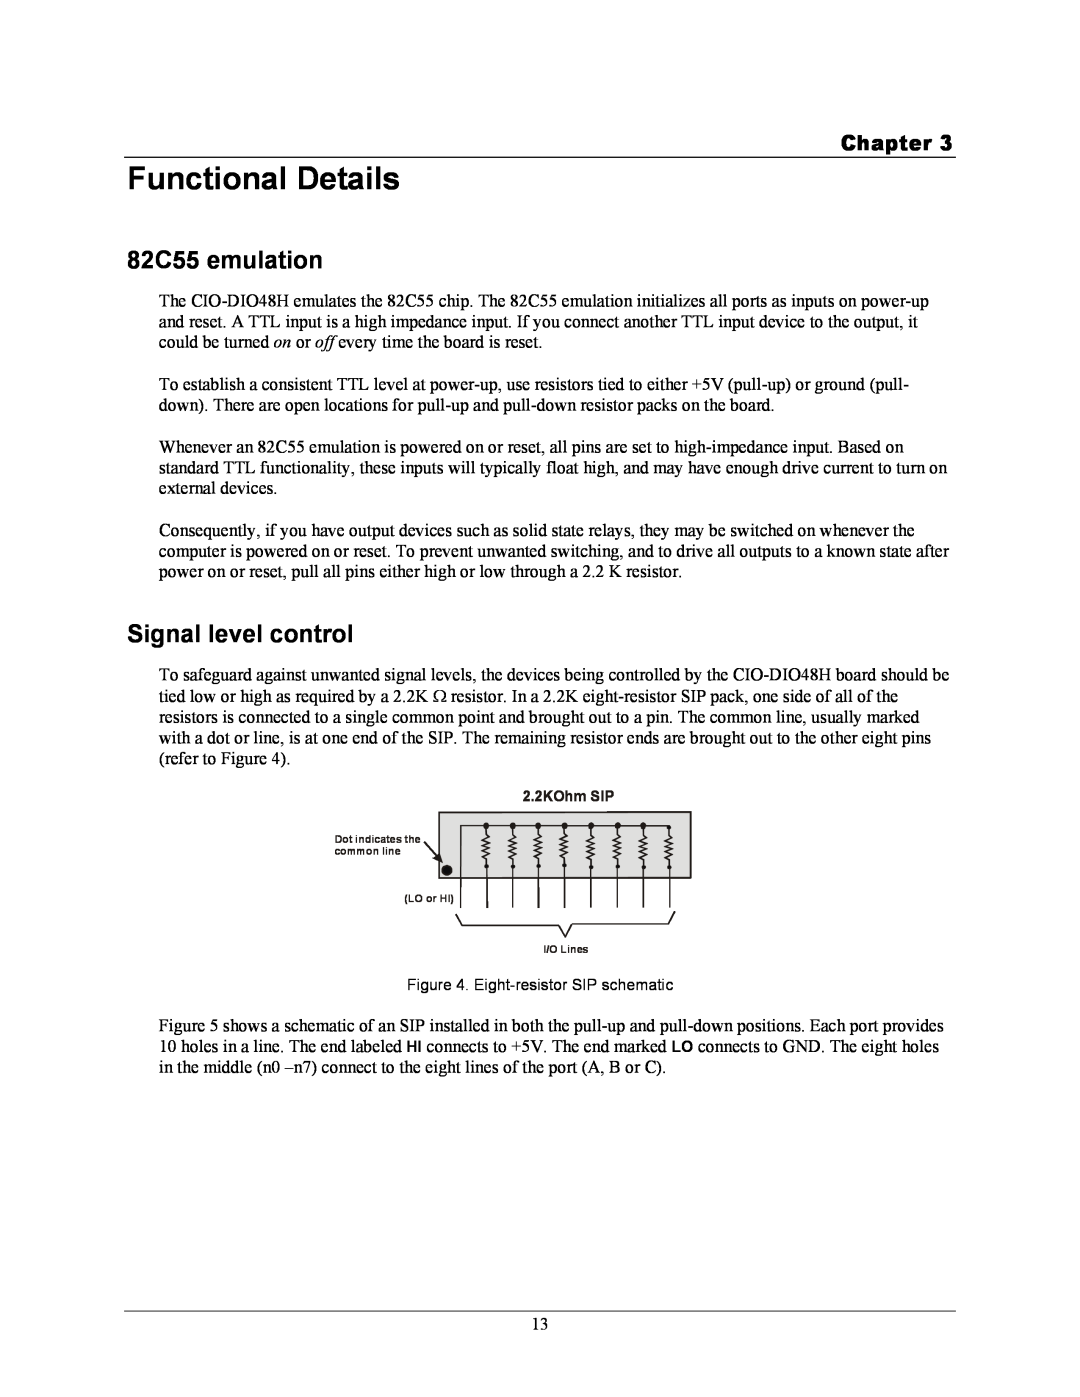 IBM CIO-DIO48H manual Functional Details, 82C55 emulation, Signal level control, Chapter 